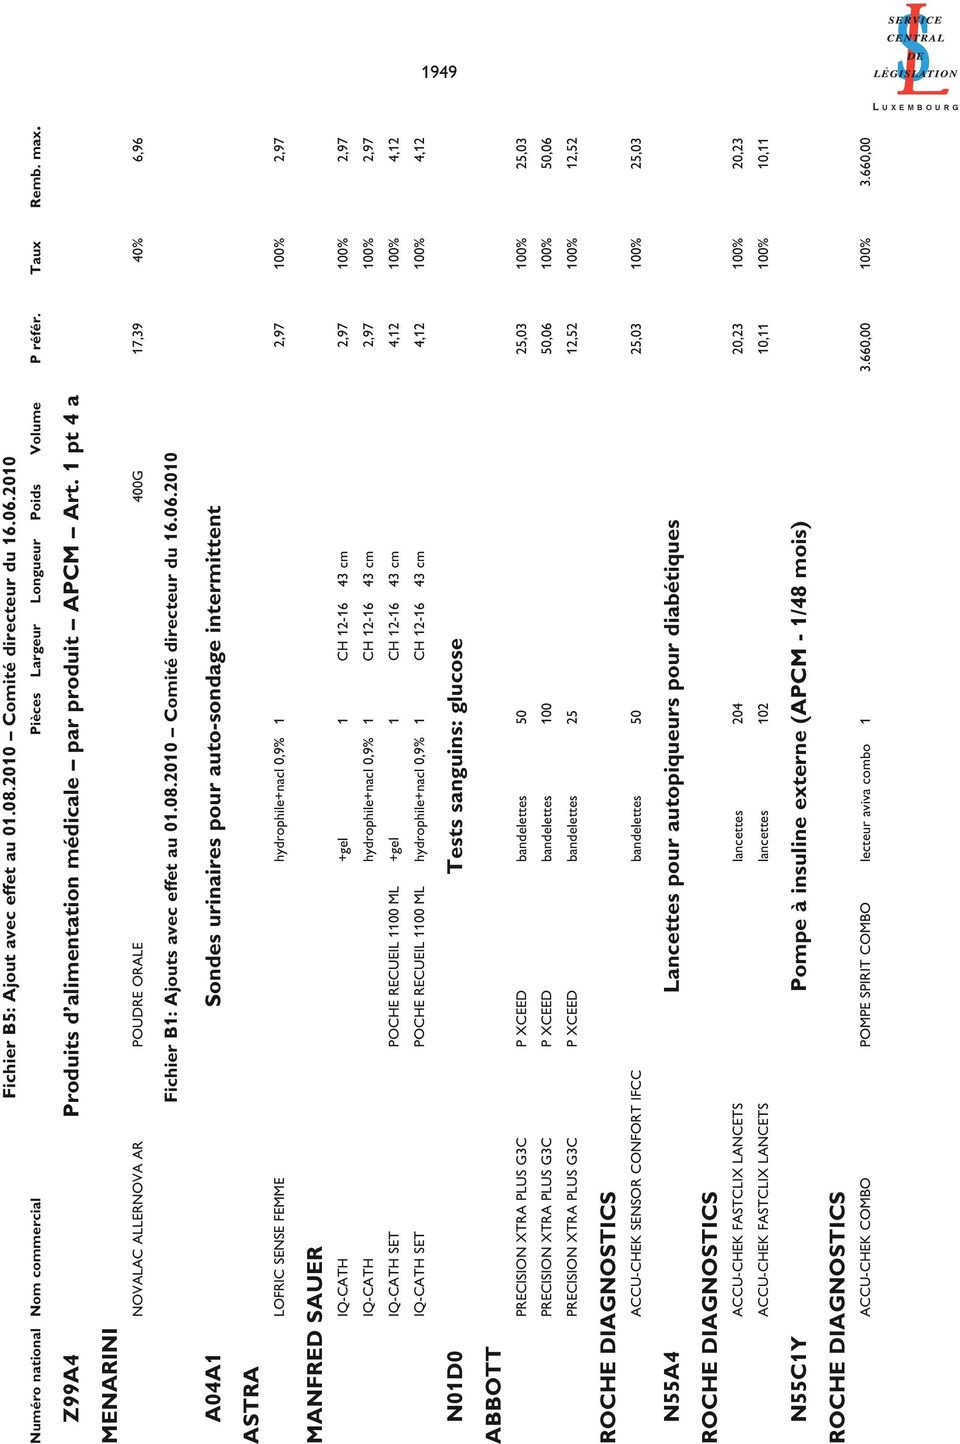 06.2010 A04A1 Sondes urinaires pour auto-sondage intermittent ASTRA LOFRIC SENSE FEMME hydrophile+nacl 0,9% 1 2,97 100% 2,97 MANFRED SAUER IQ-CATH +gel 1 CH 12-16 43 cm 2,97 100% 2,97 IQ-CATH